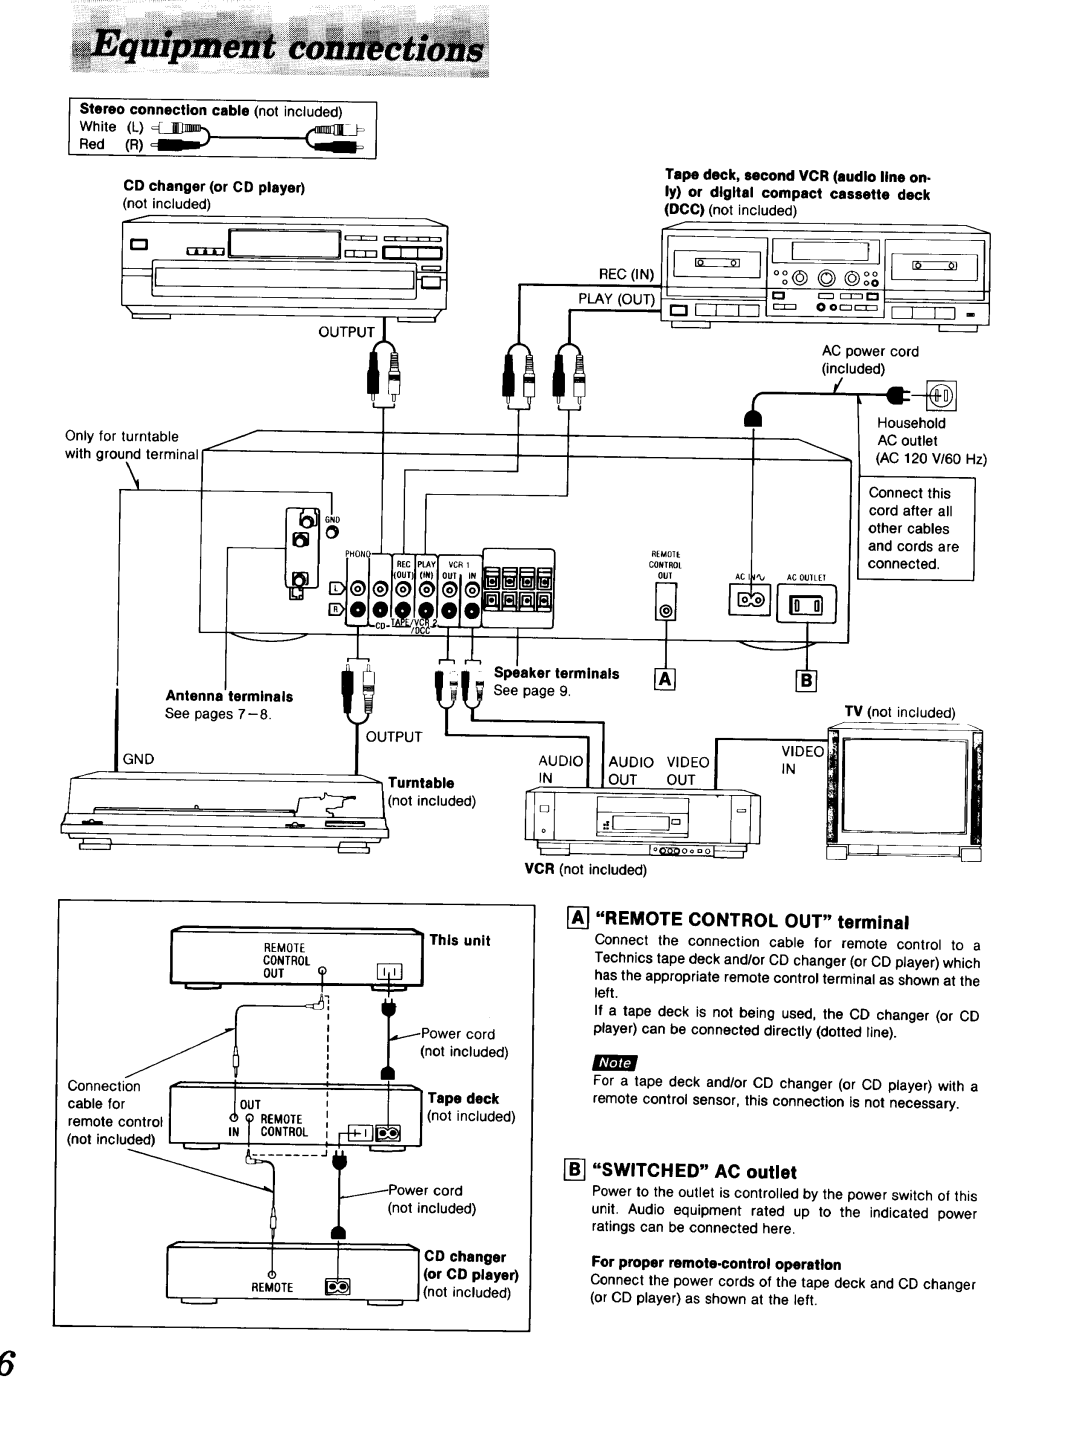 Technics SA-GX 19O manual Anudioiaudio, SWITCHED AC outlet, Control 